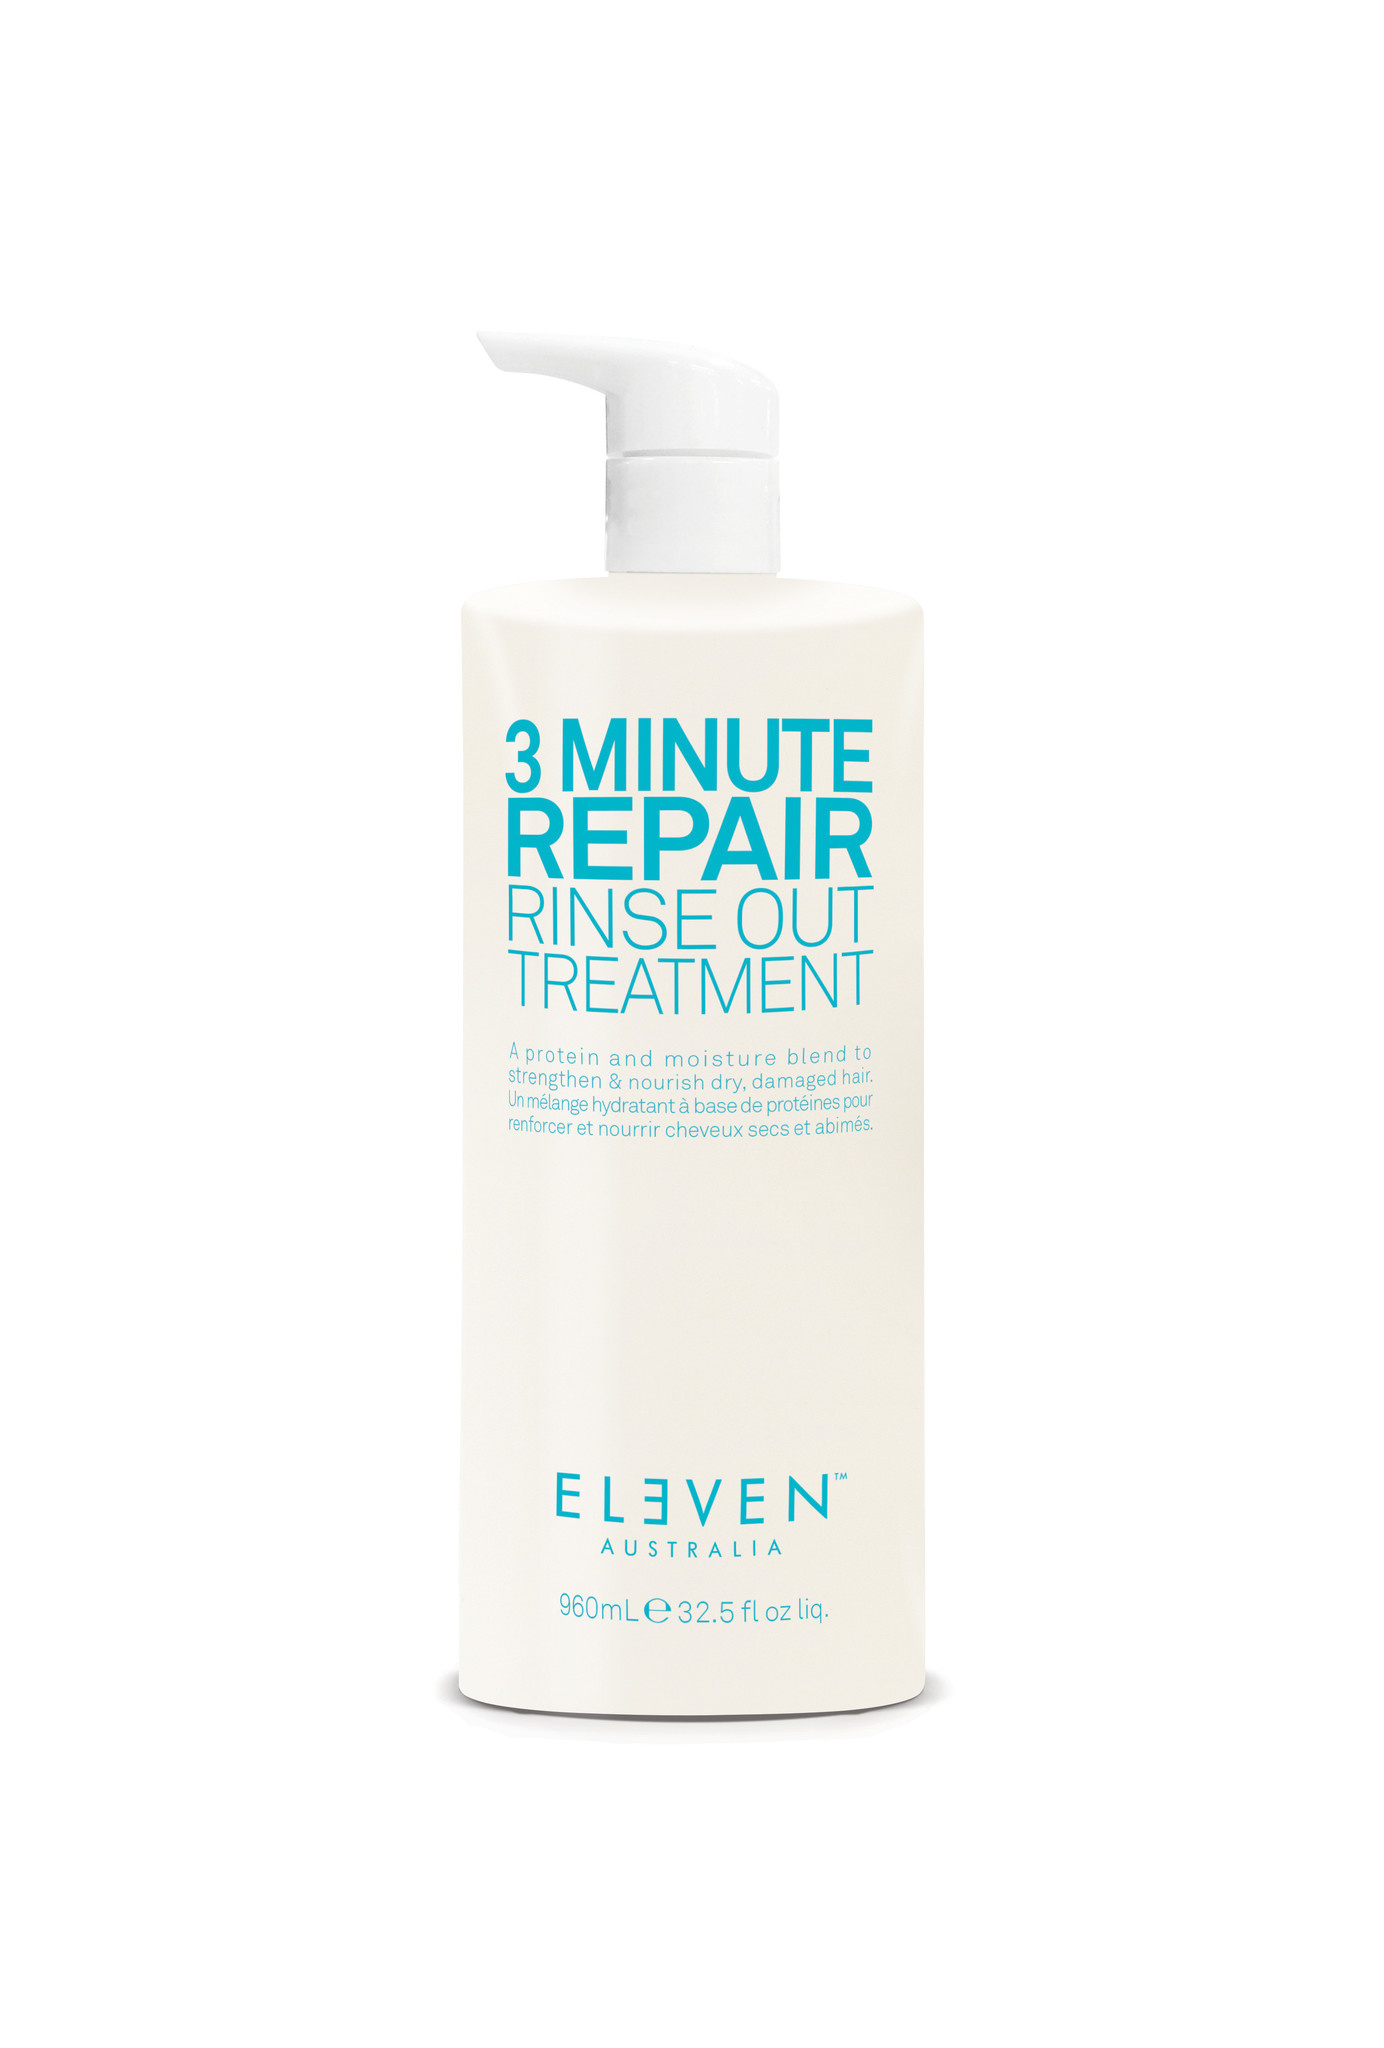 Eleven Australia 3 Minute Rinse Out Repair Treatment